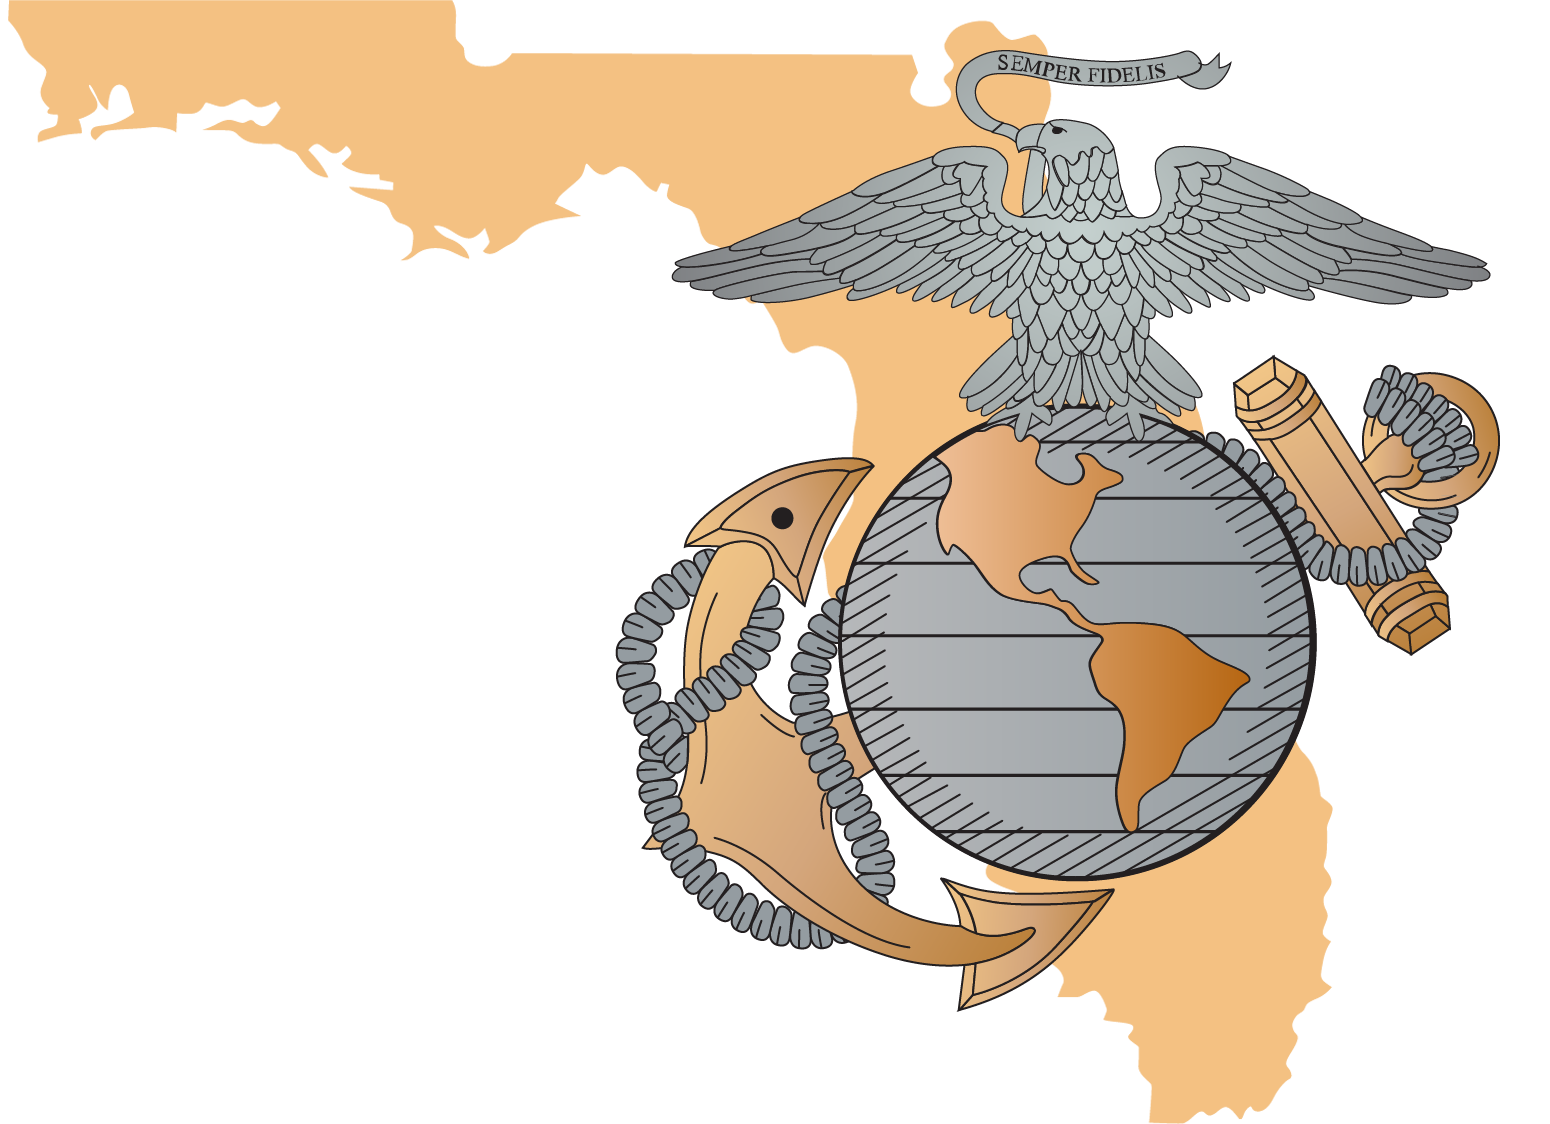 Central Florida Marine Corps Foundation